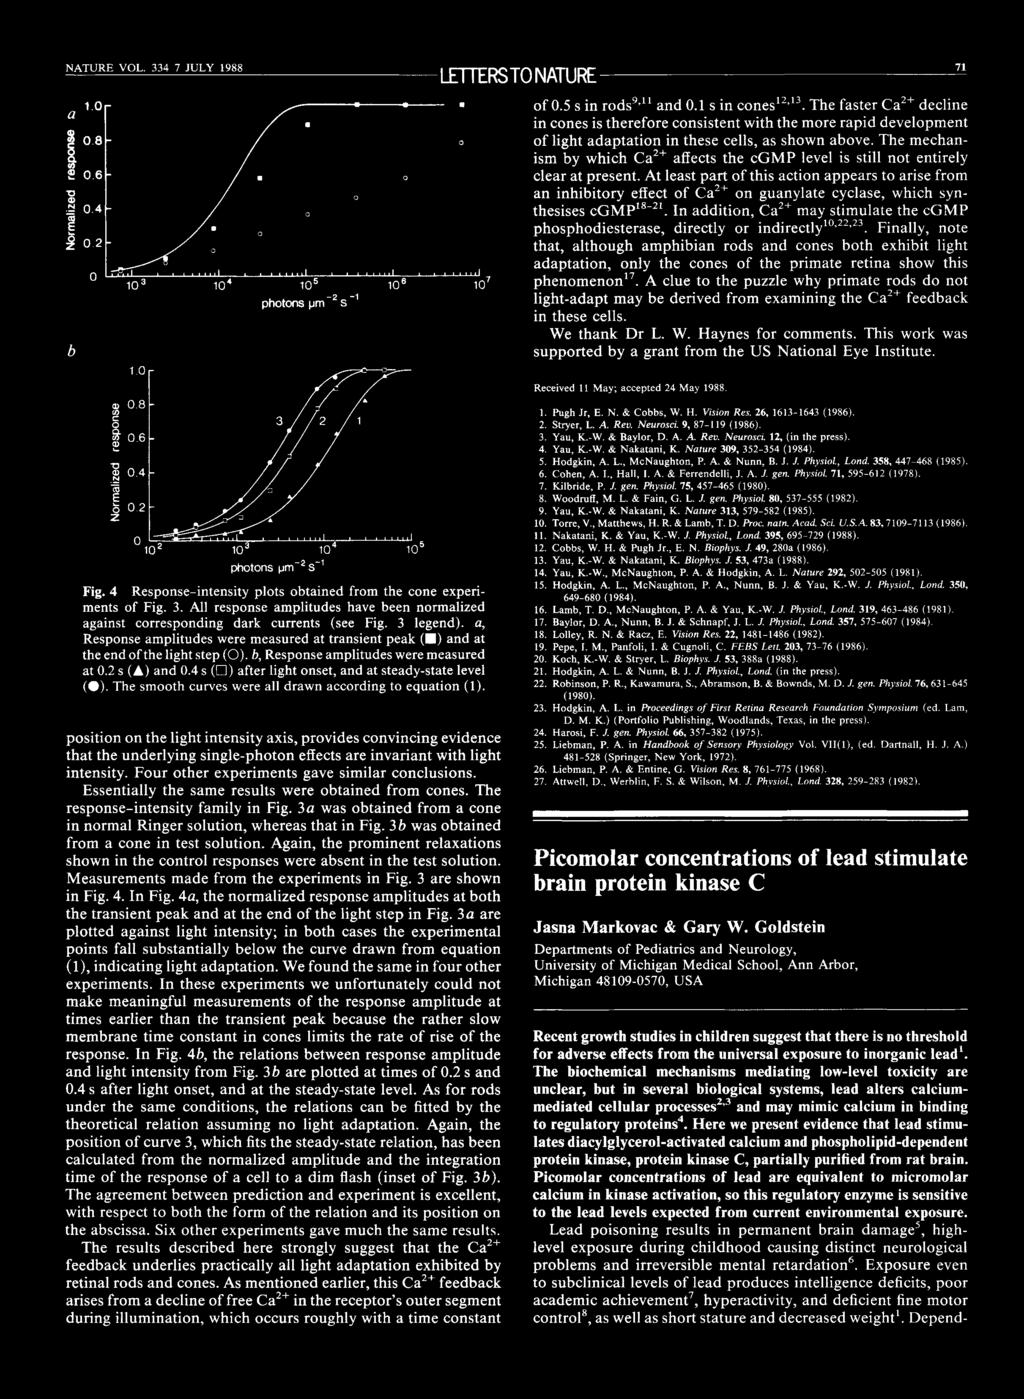 Ca ++ and rod adaptation (Nakatani and Yau, 1988) Ca ++ and rod adaptation Figure 10.